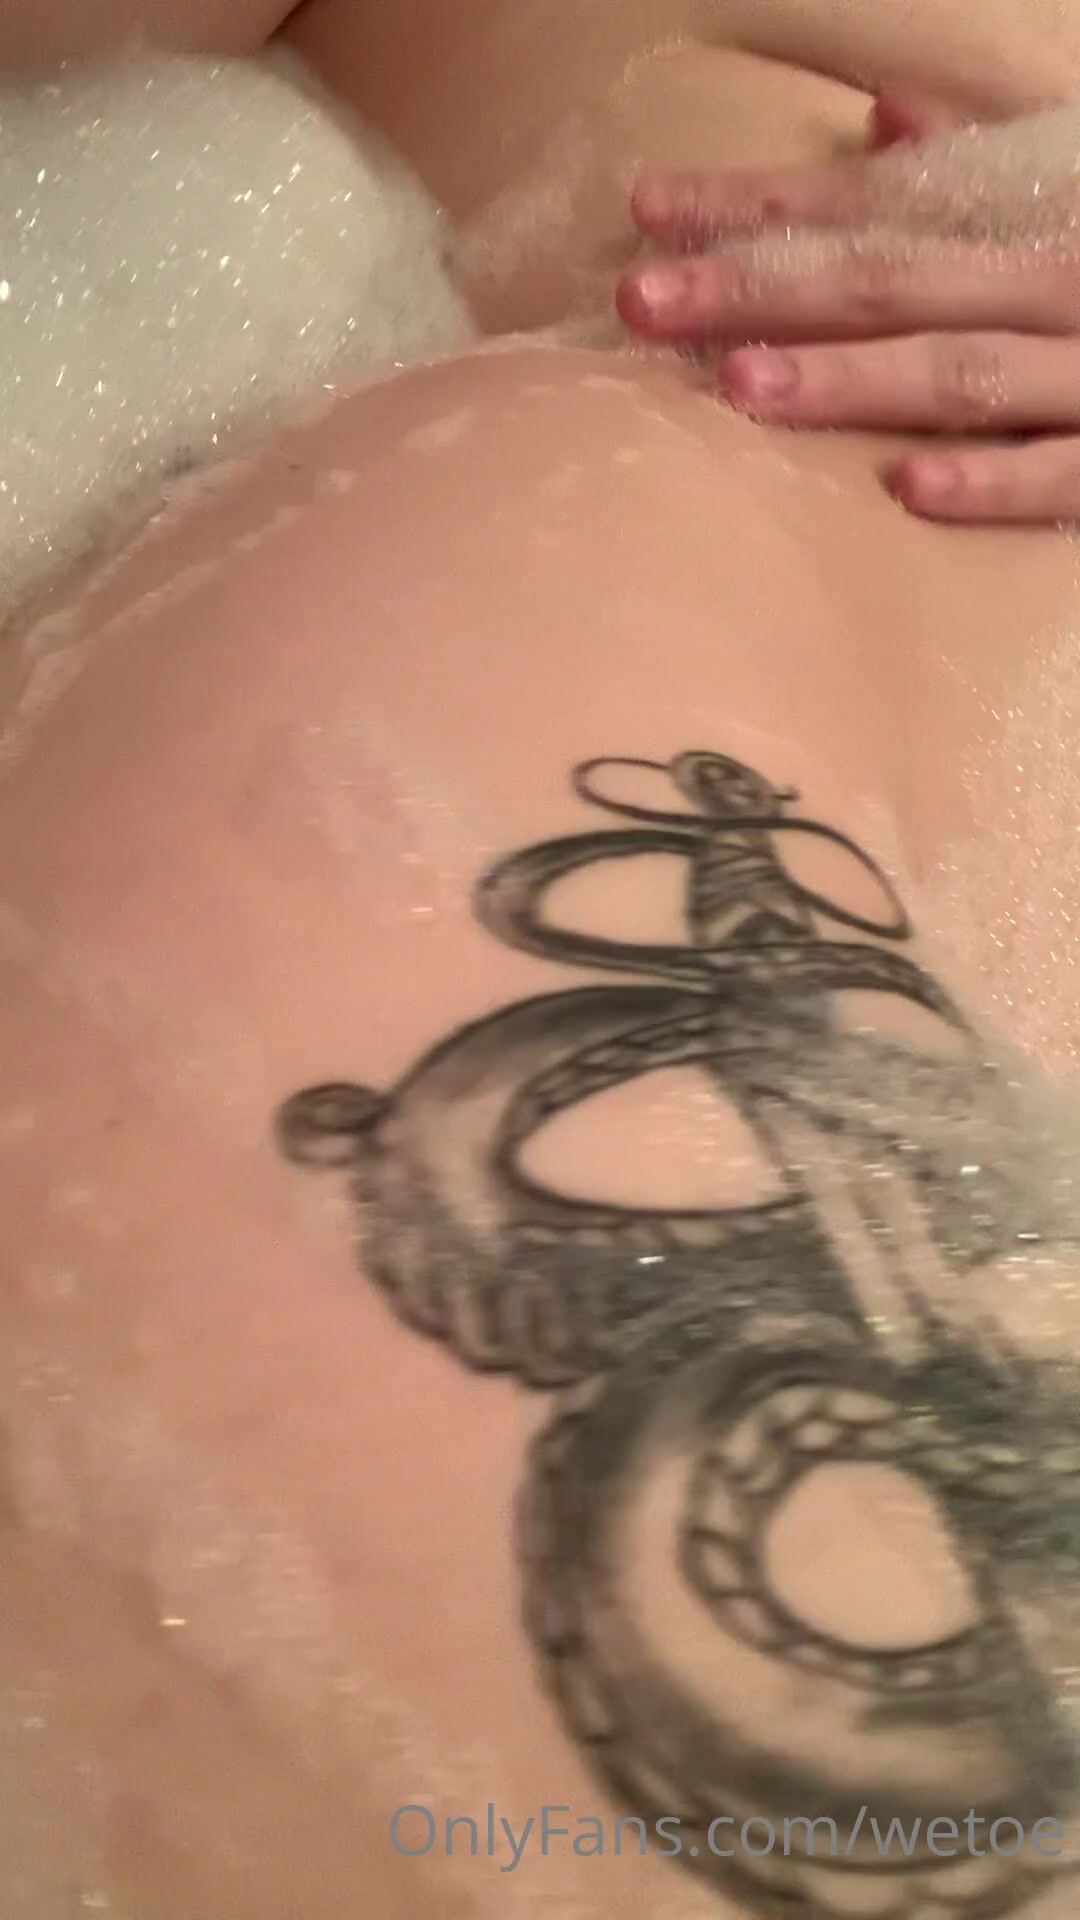 Wetoe Bubble Bath Nude